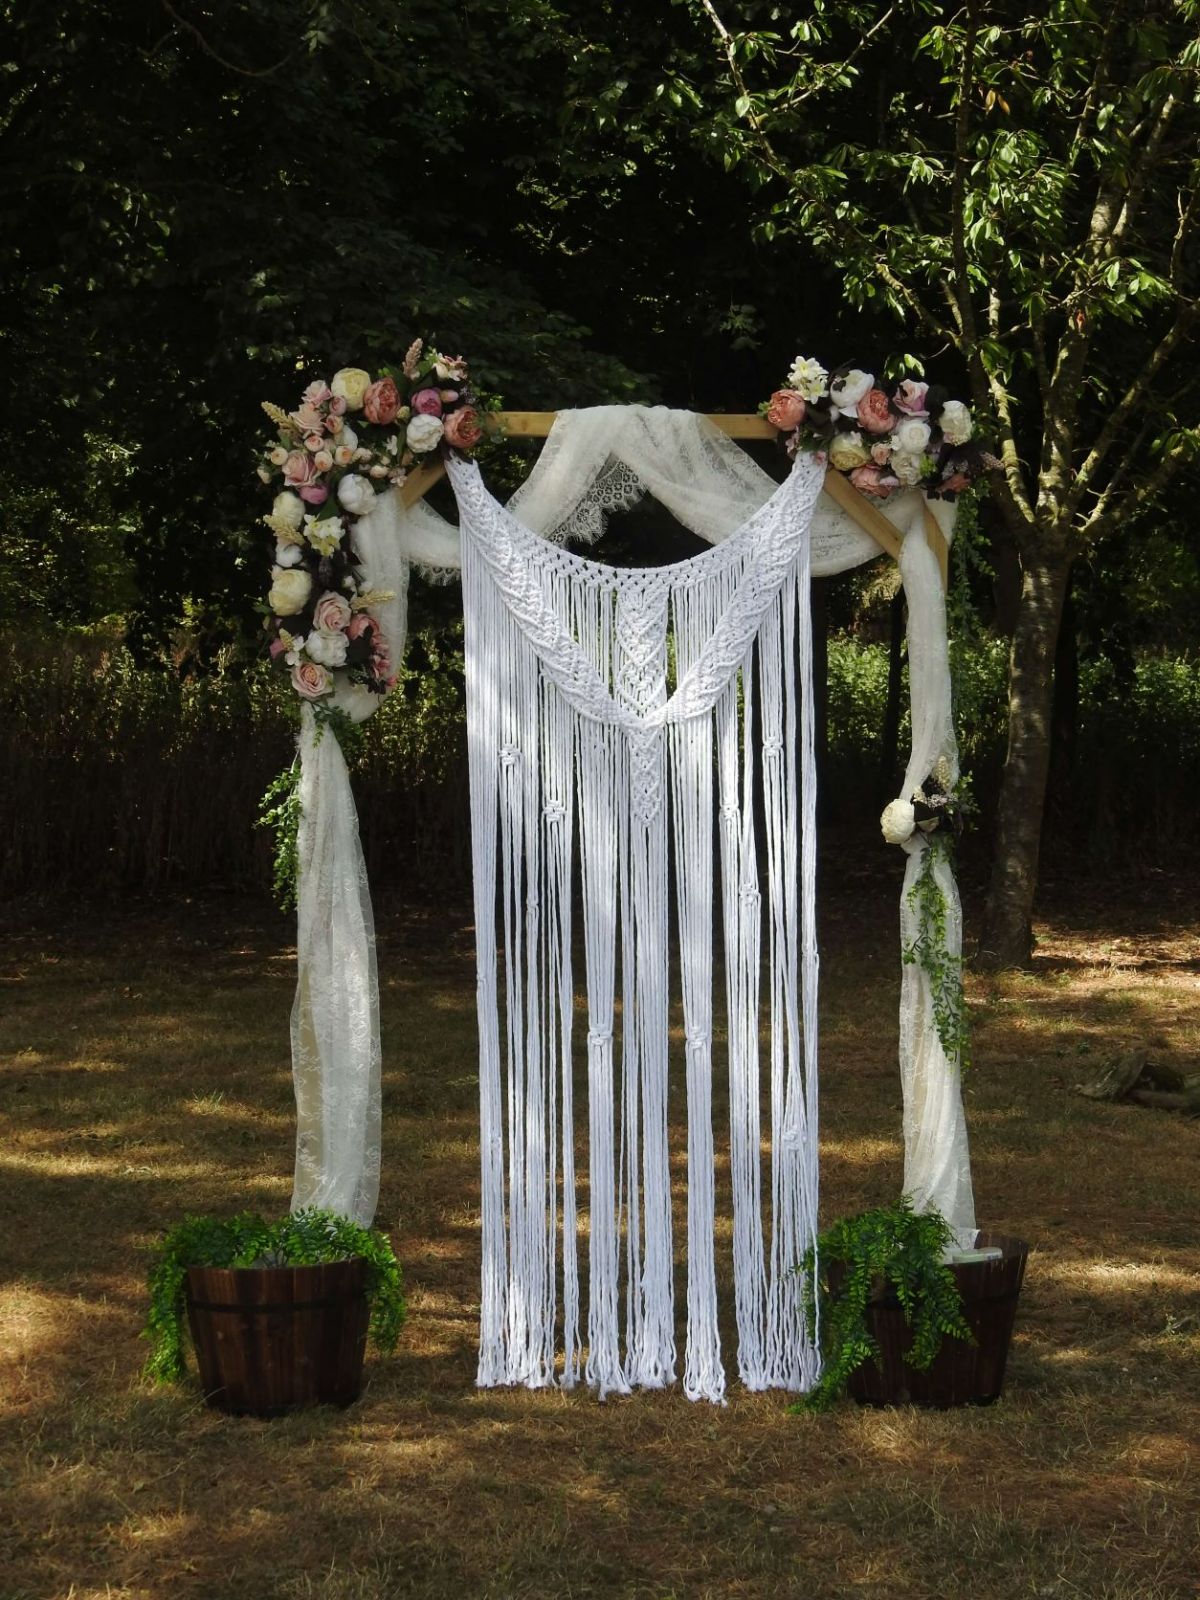 Brides homemade flower arch for the celebrant led ceremony